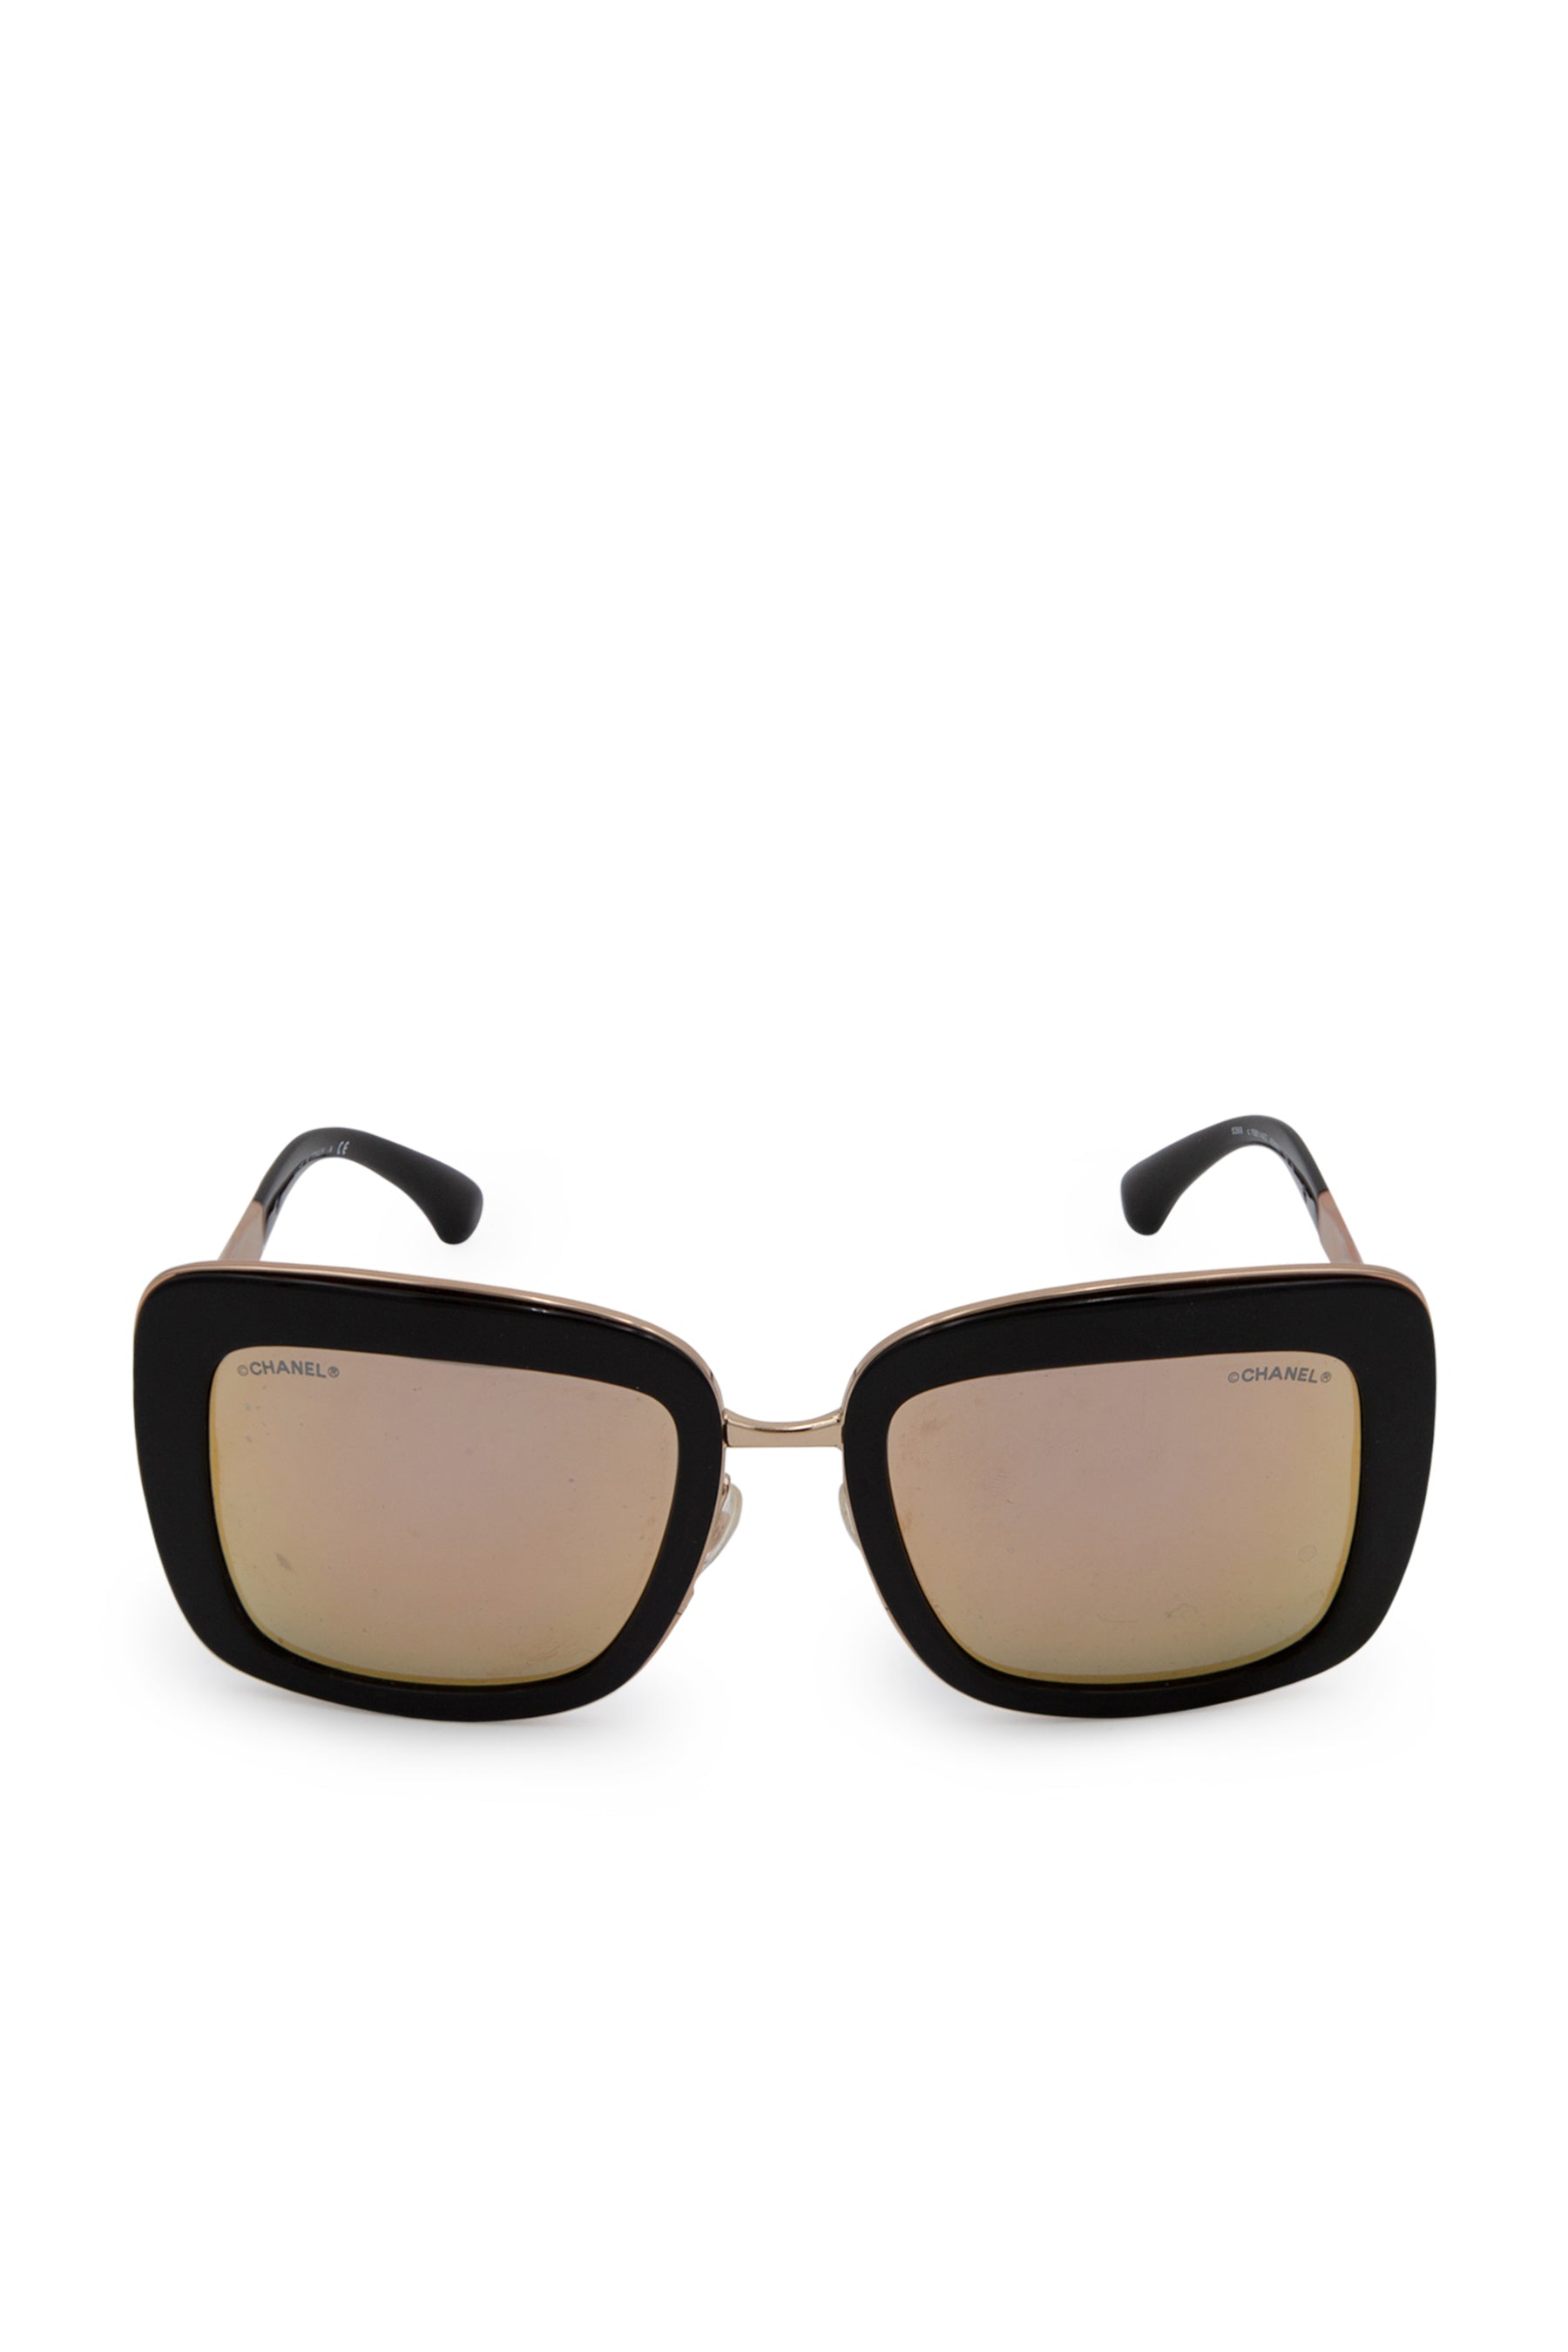 Chanel Square Sunglasses w/ Acetate Metal – Dora Maar